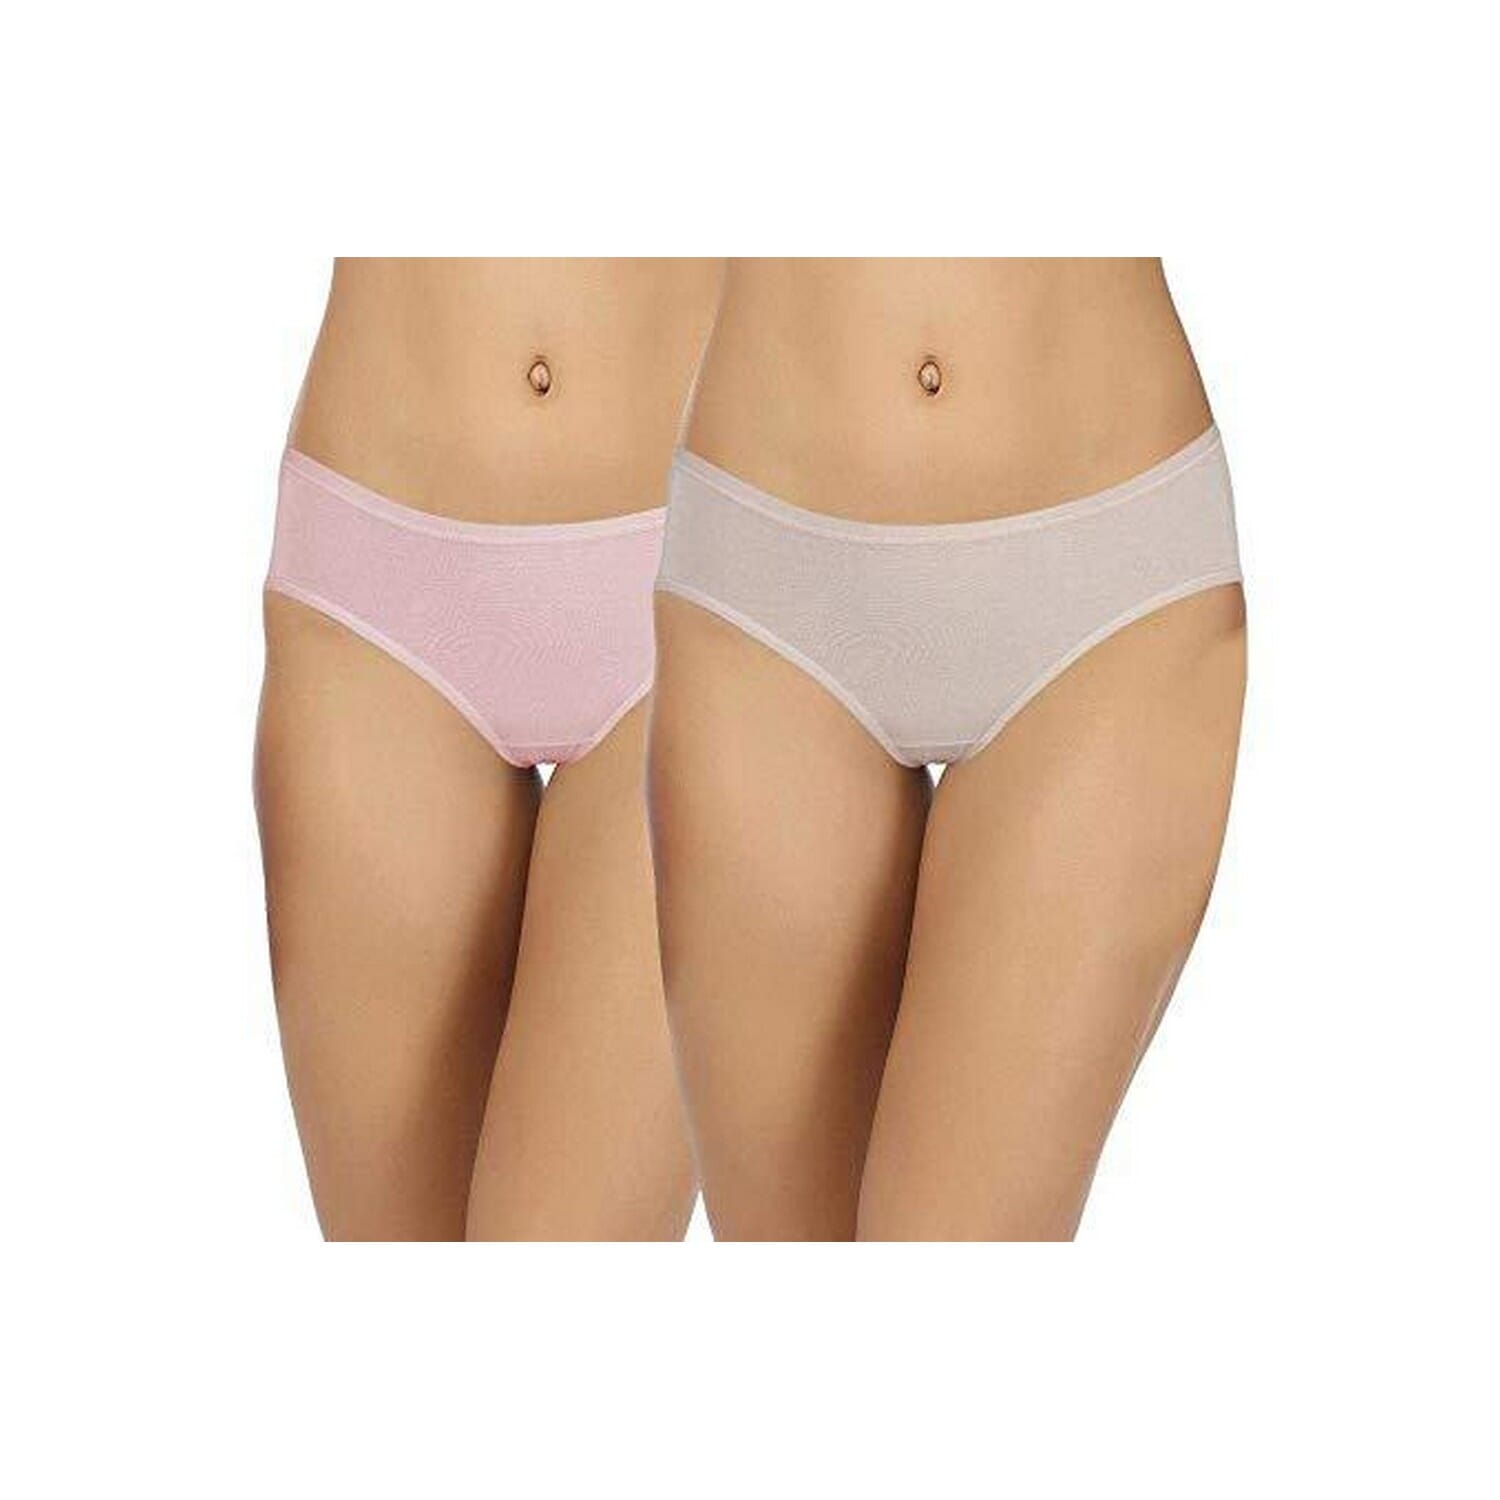 Box Of 2 Women And Girls Super Soft Cotton Modal Fabric Panty